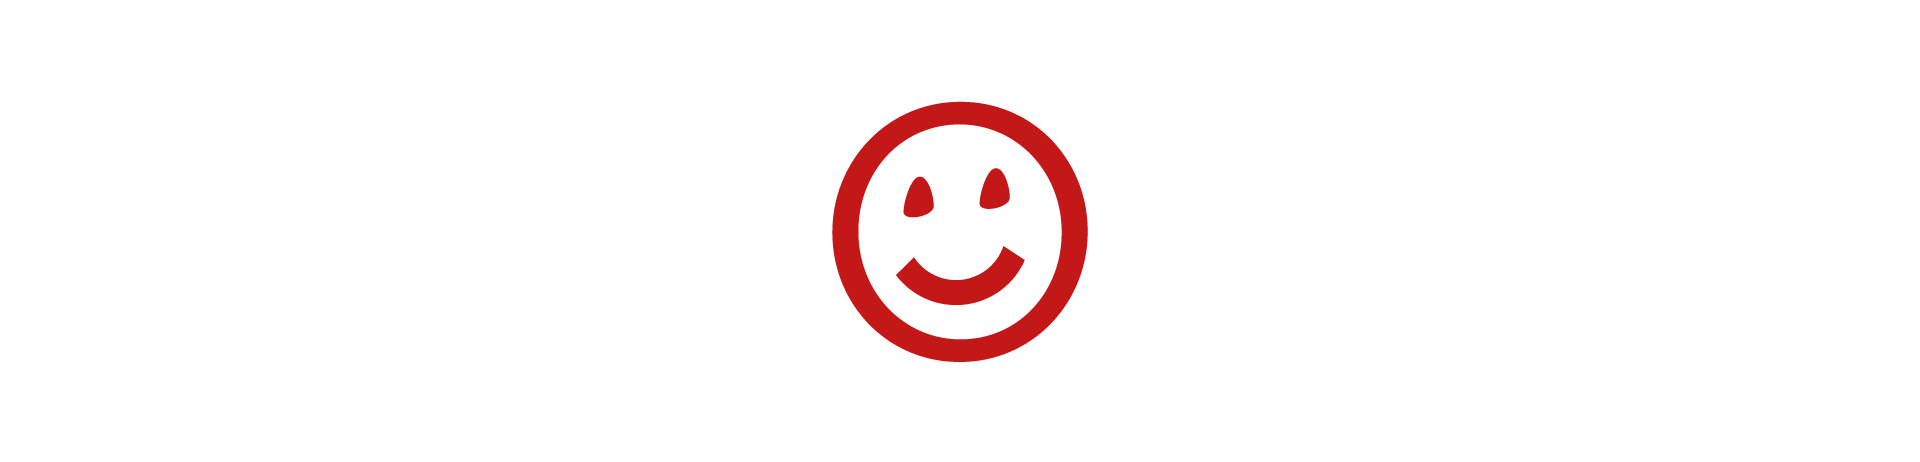 beqom-logo_red_smile